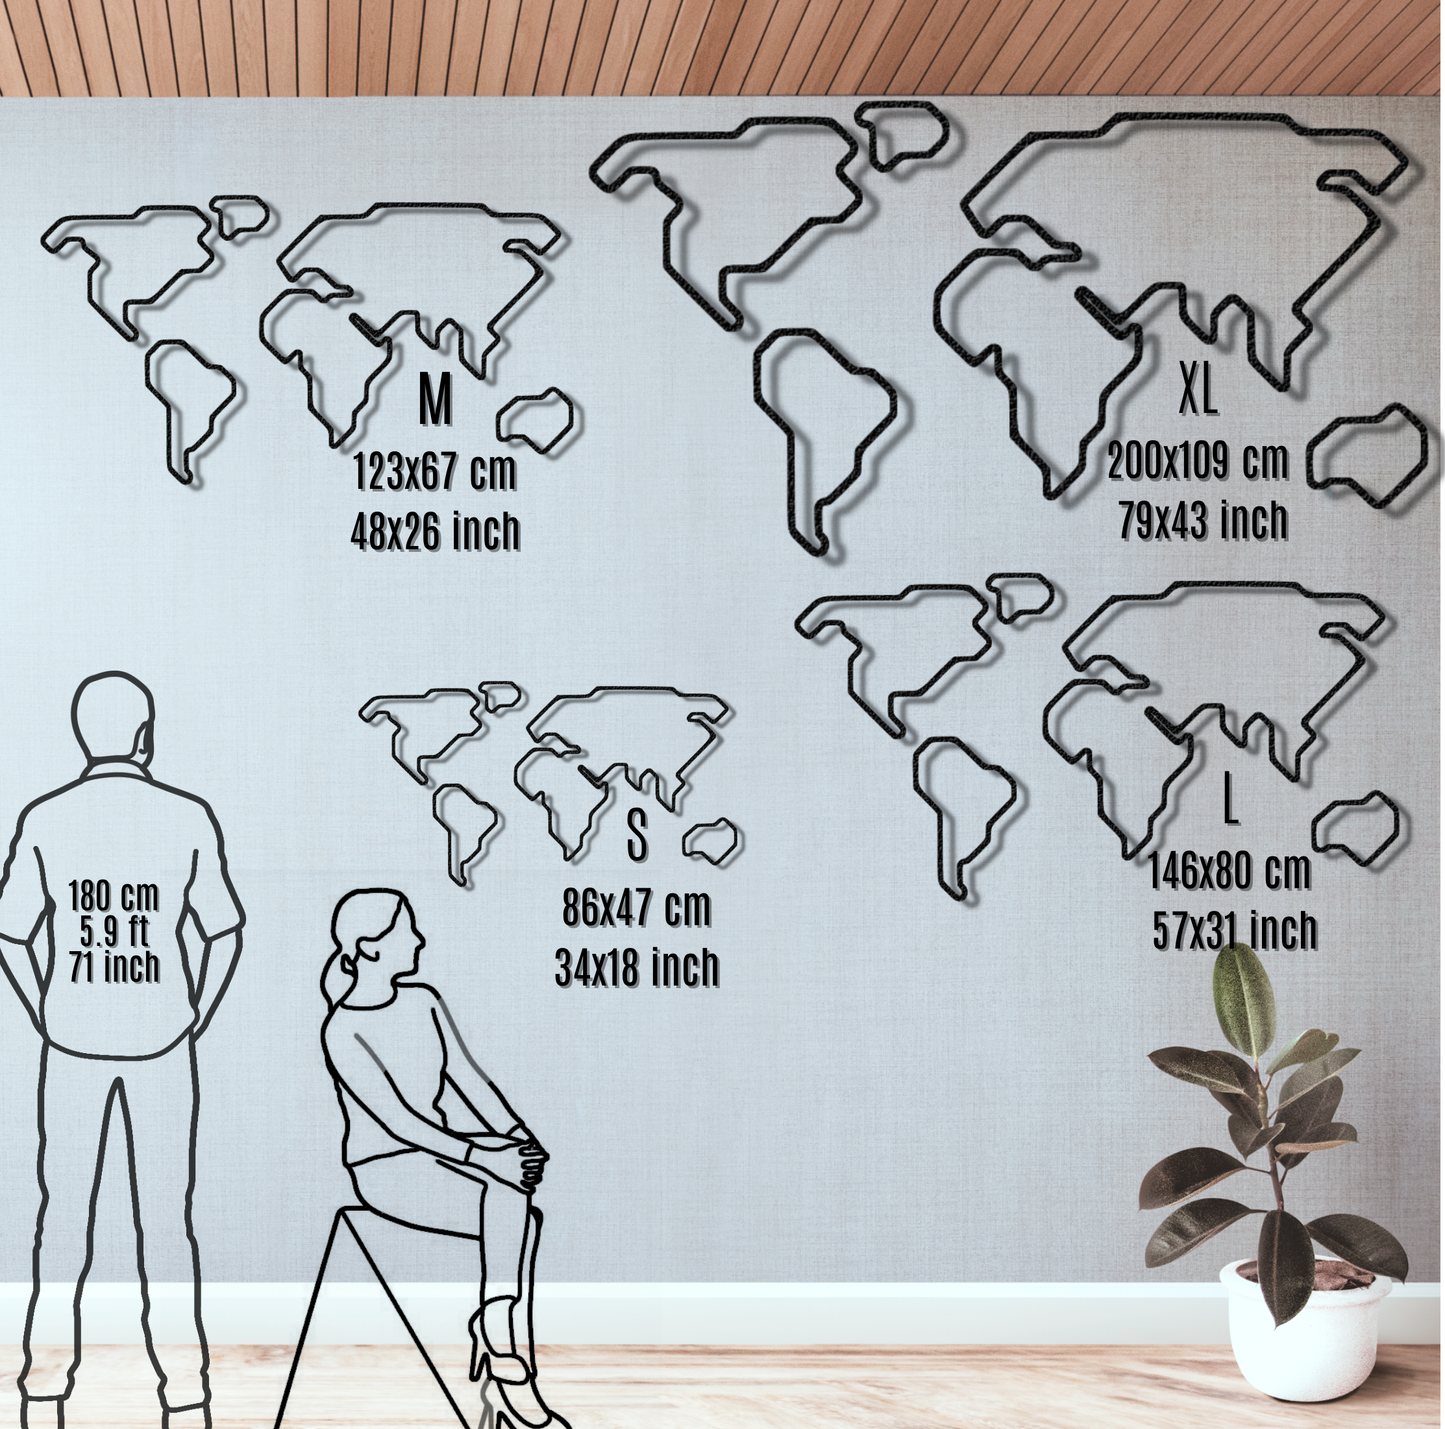 Große Weltkarte Wandkunst aus Metall